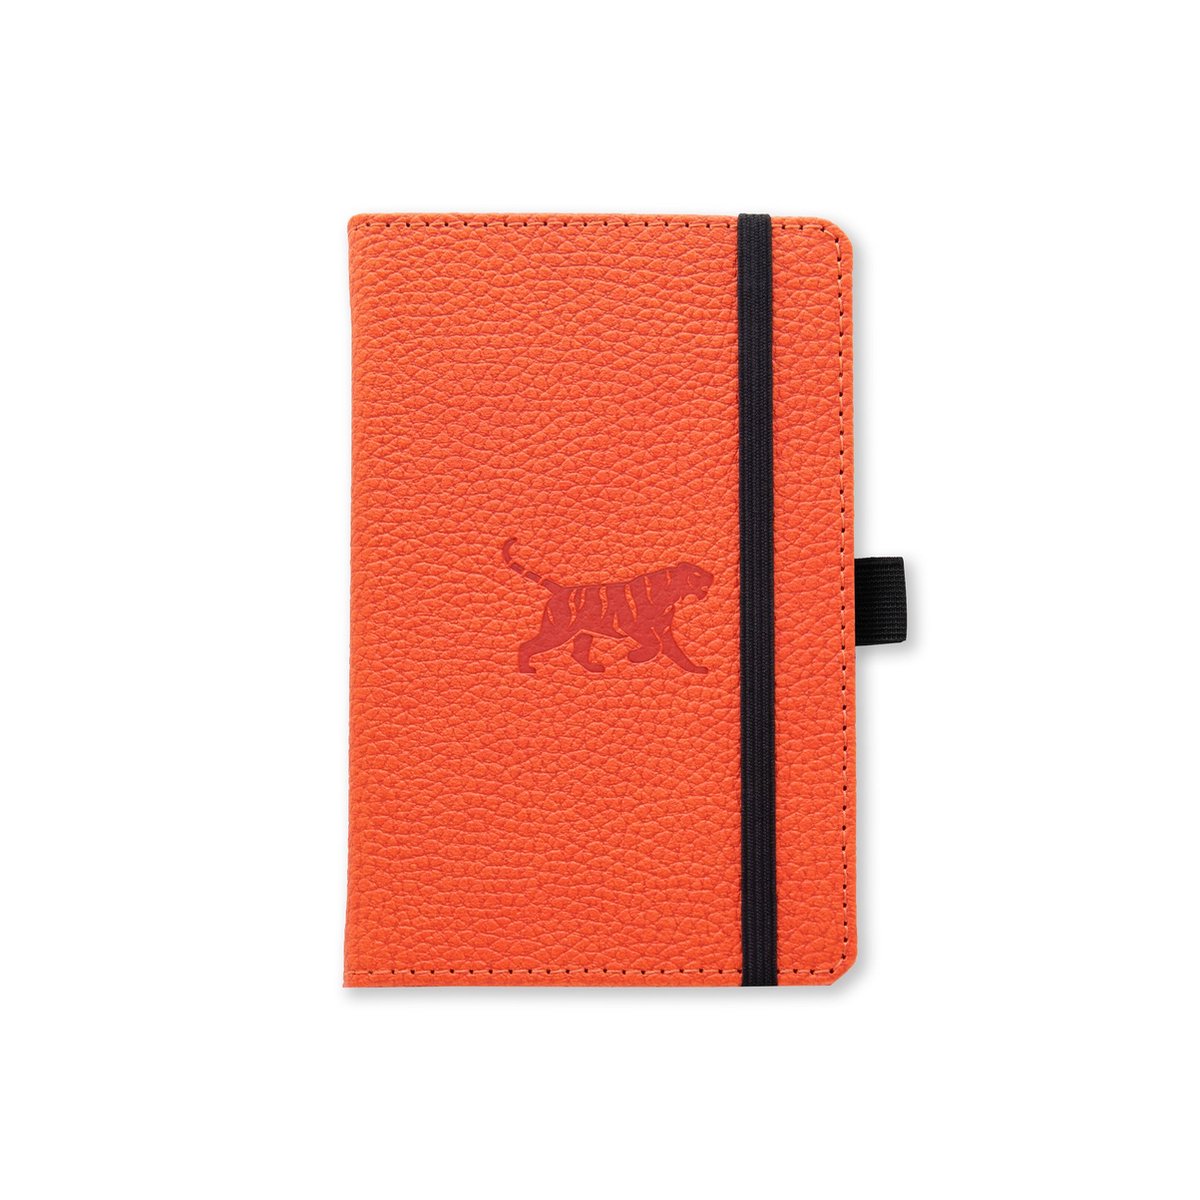 Dingbats A6 Pocket Wildlife Orange Tiger Notebook - Plain